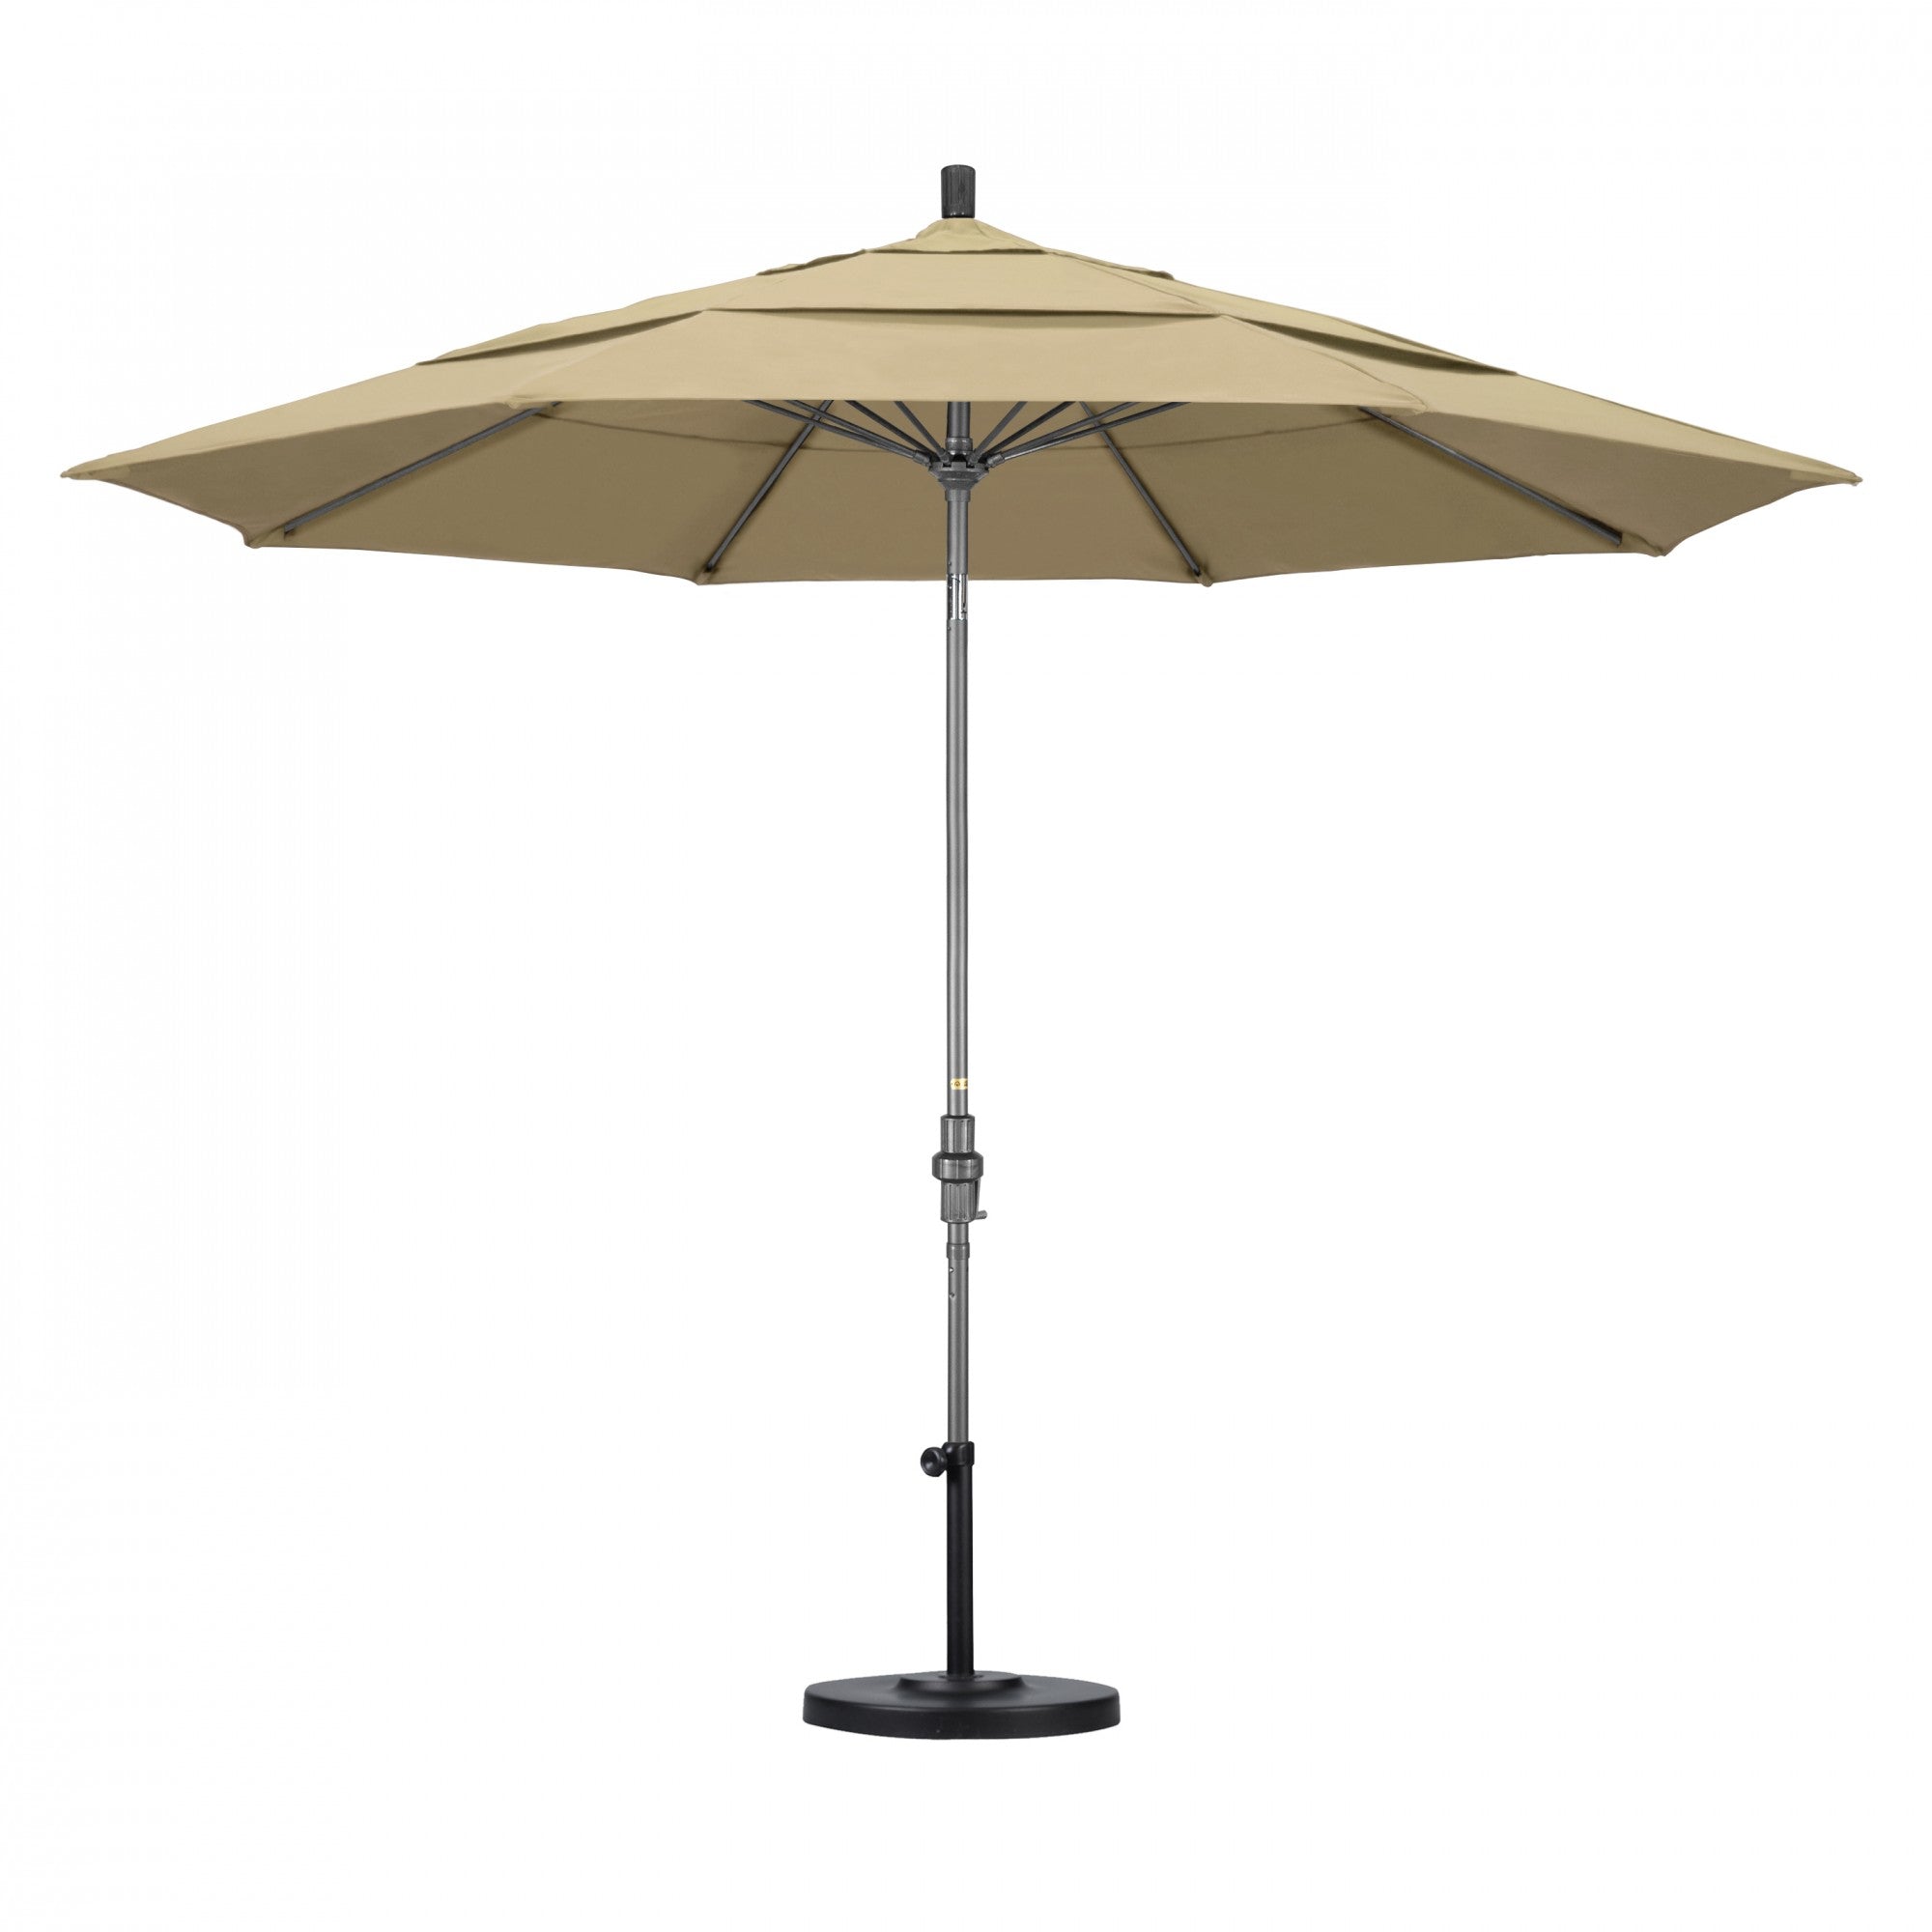 California Umbrella - 11' - Patio Umbrella Umbrella - Aluminum Pole - Beige - Pacifica - GSCUF118010-SA22-DWV